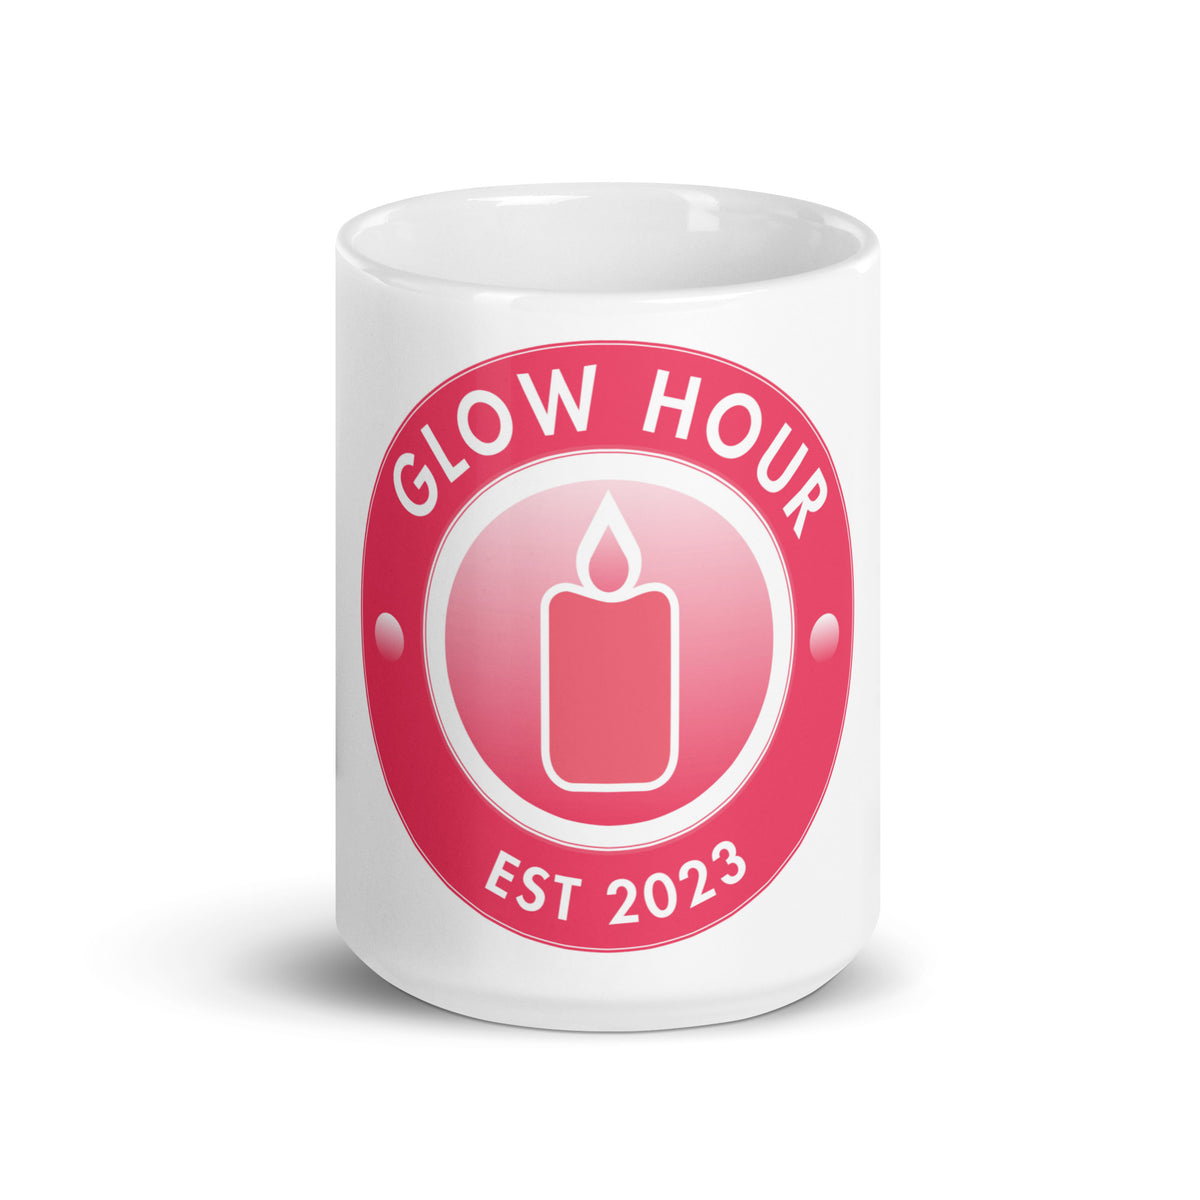 Glow Hour White Glossy Mug